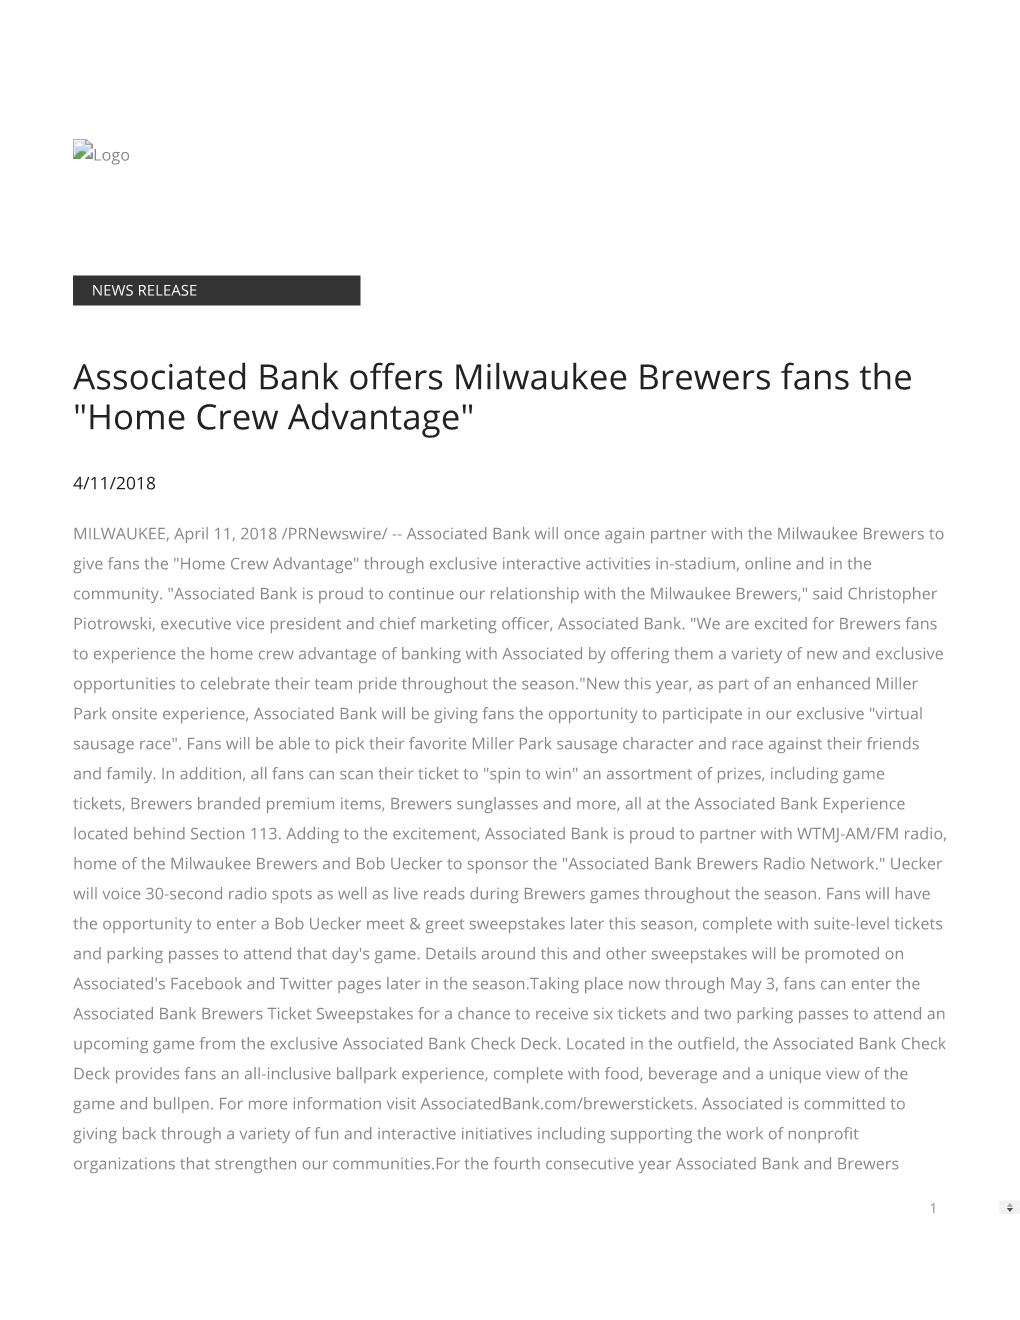 Associated Bank O Ers Milwaukee Brewers Fans the "Home